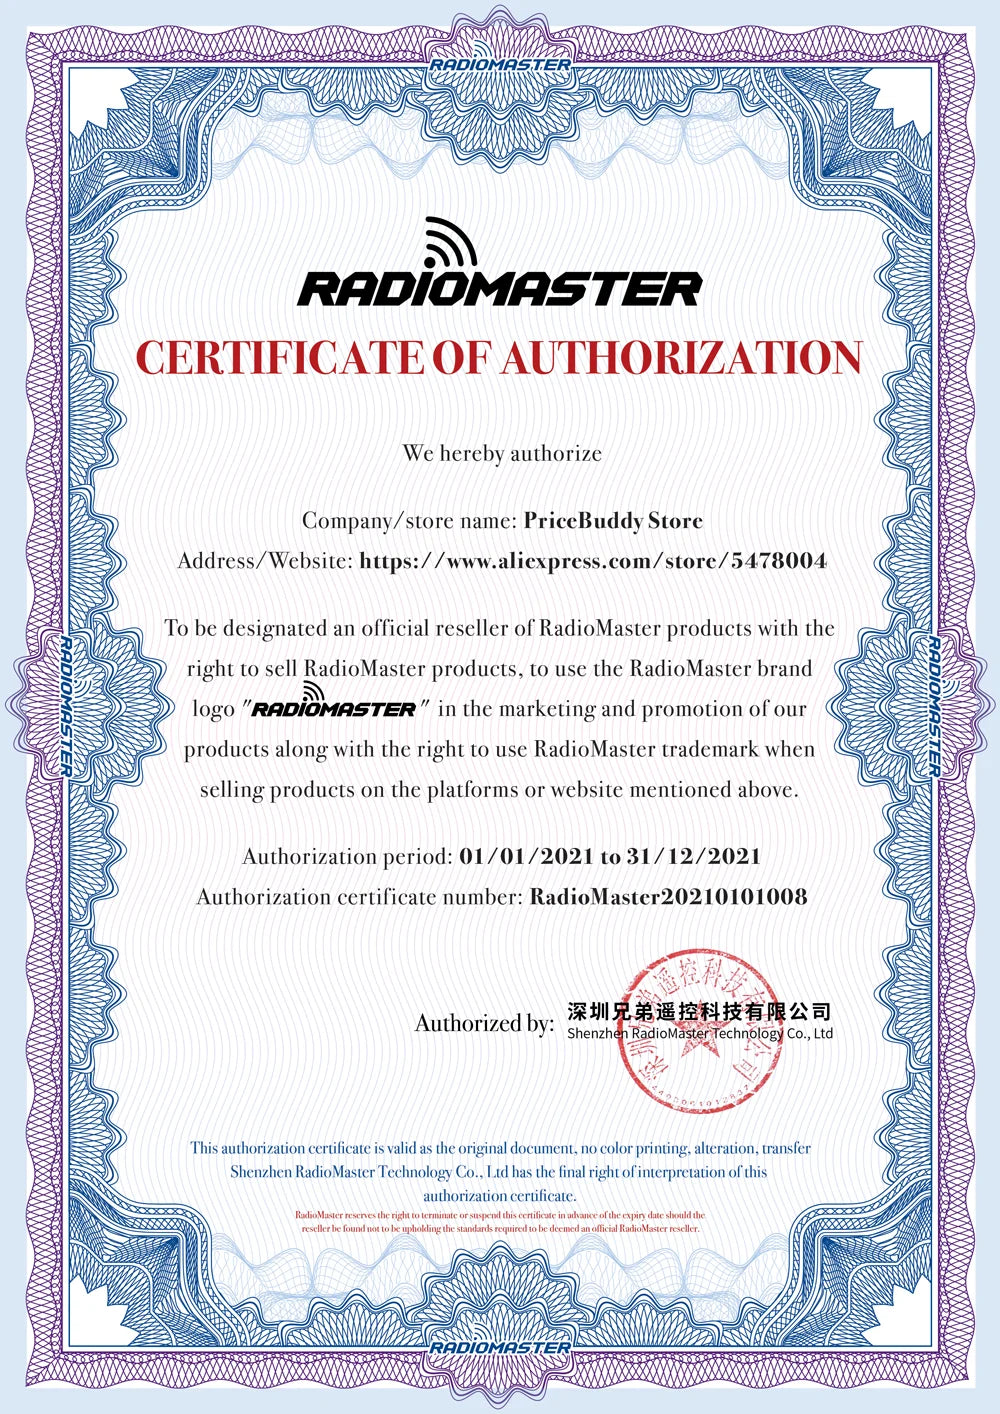 RadioMaster hereby authorizes us to use the RadioMaster brand RADiOMASTER